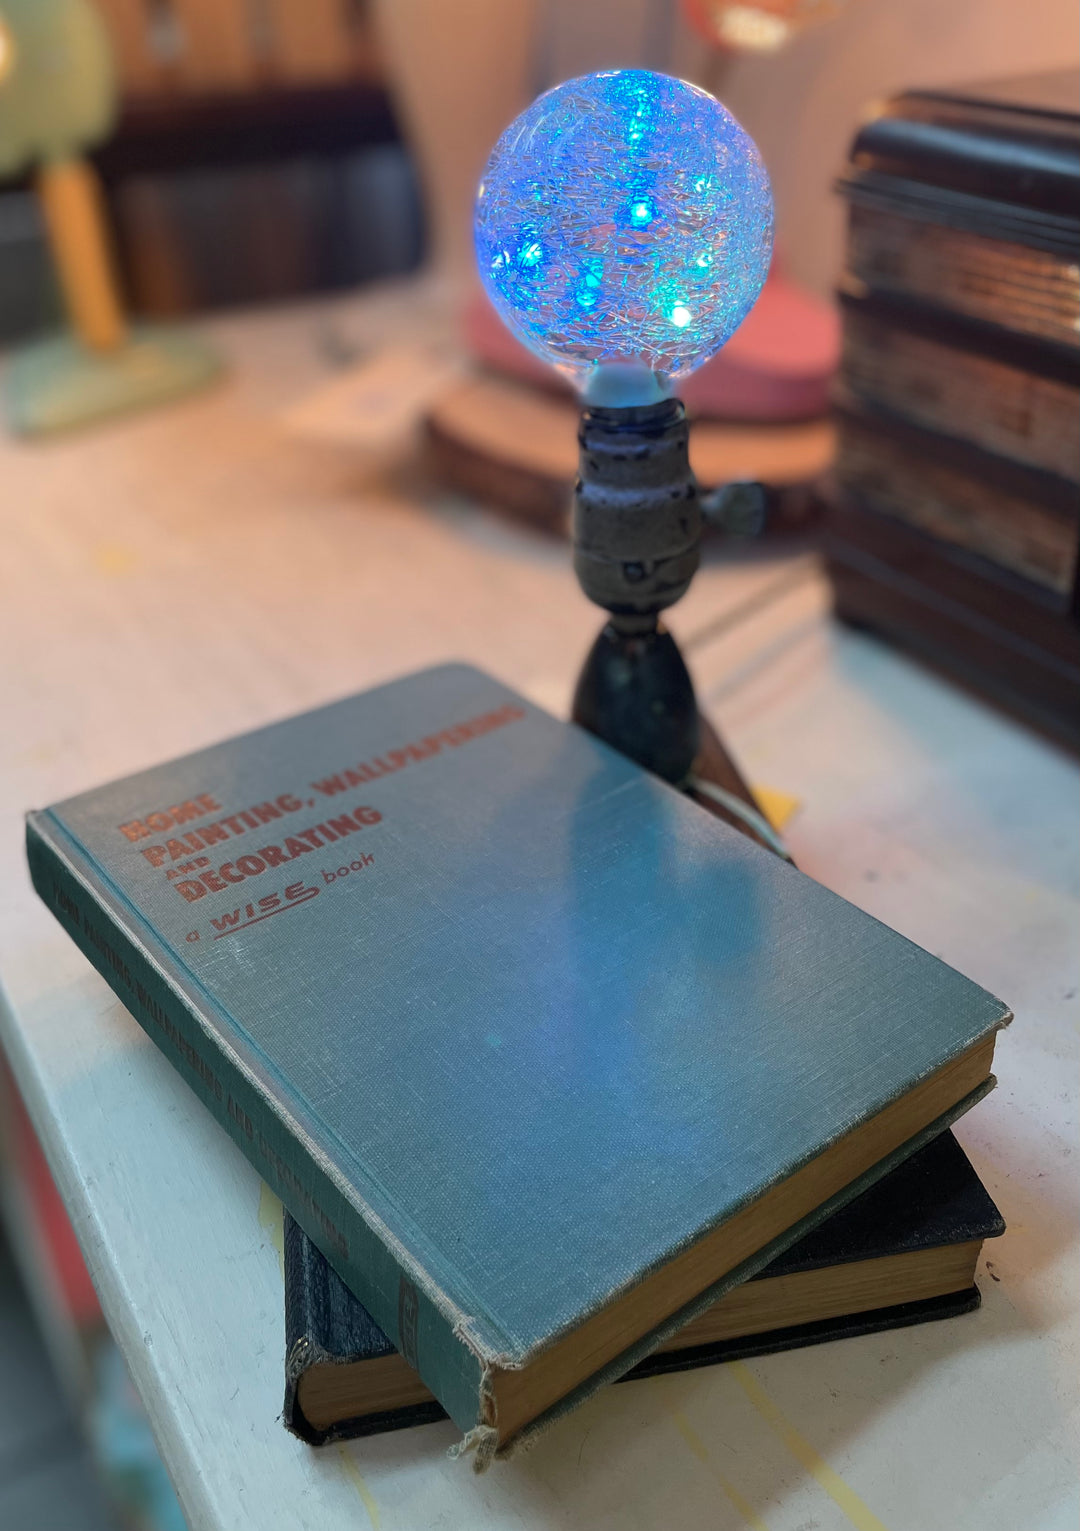 BOOK LAMP - HOME DECORATING AND WALLPAPER INCANDESCENT NOSTALGIC LOOP E26 BULB